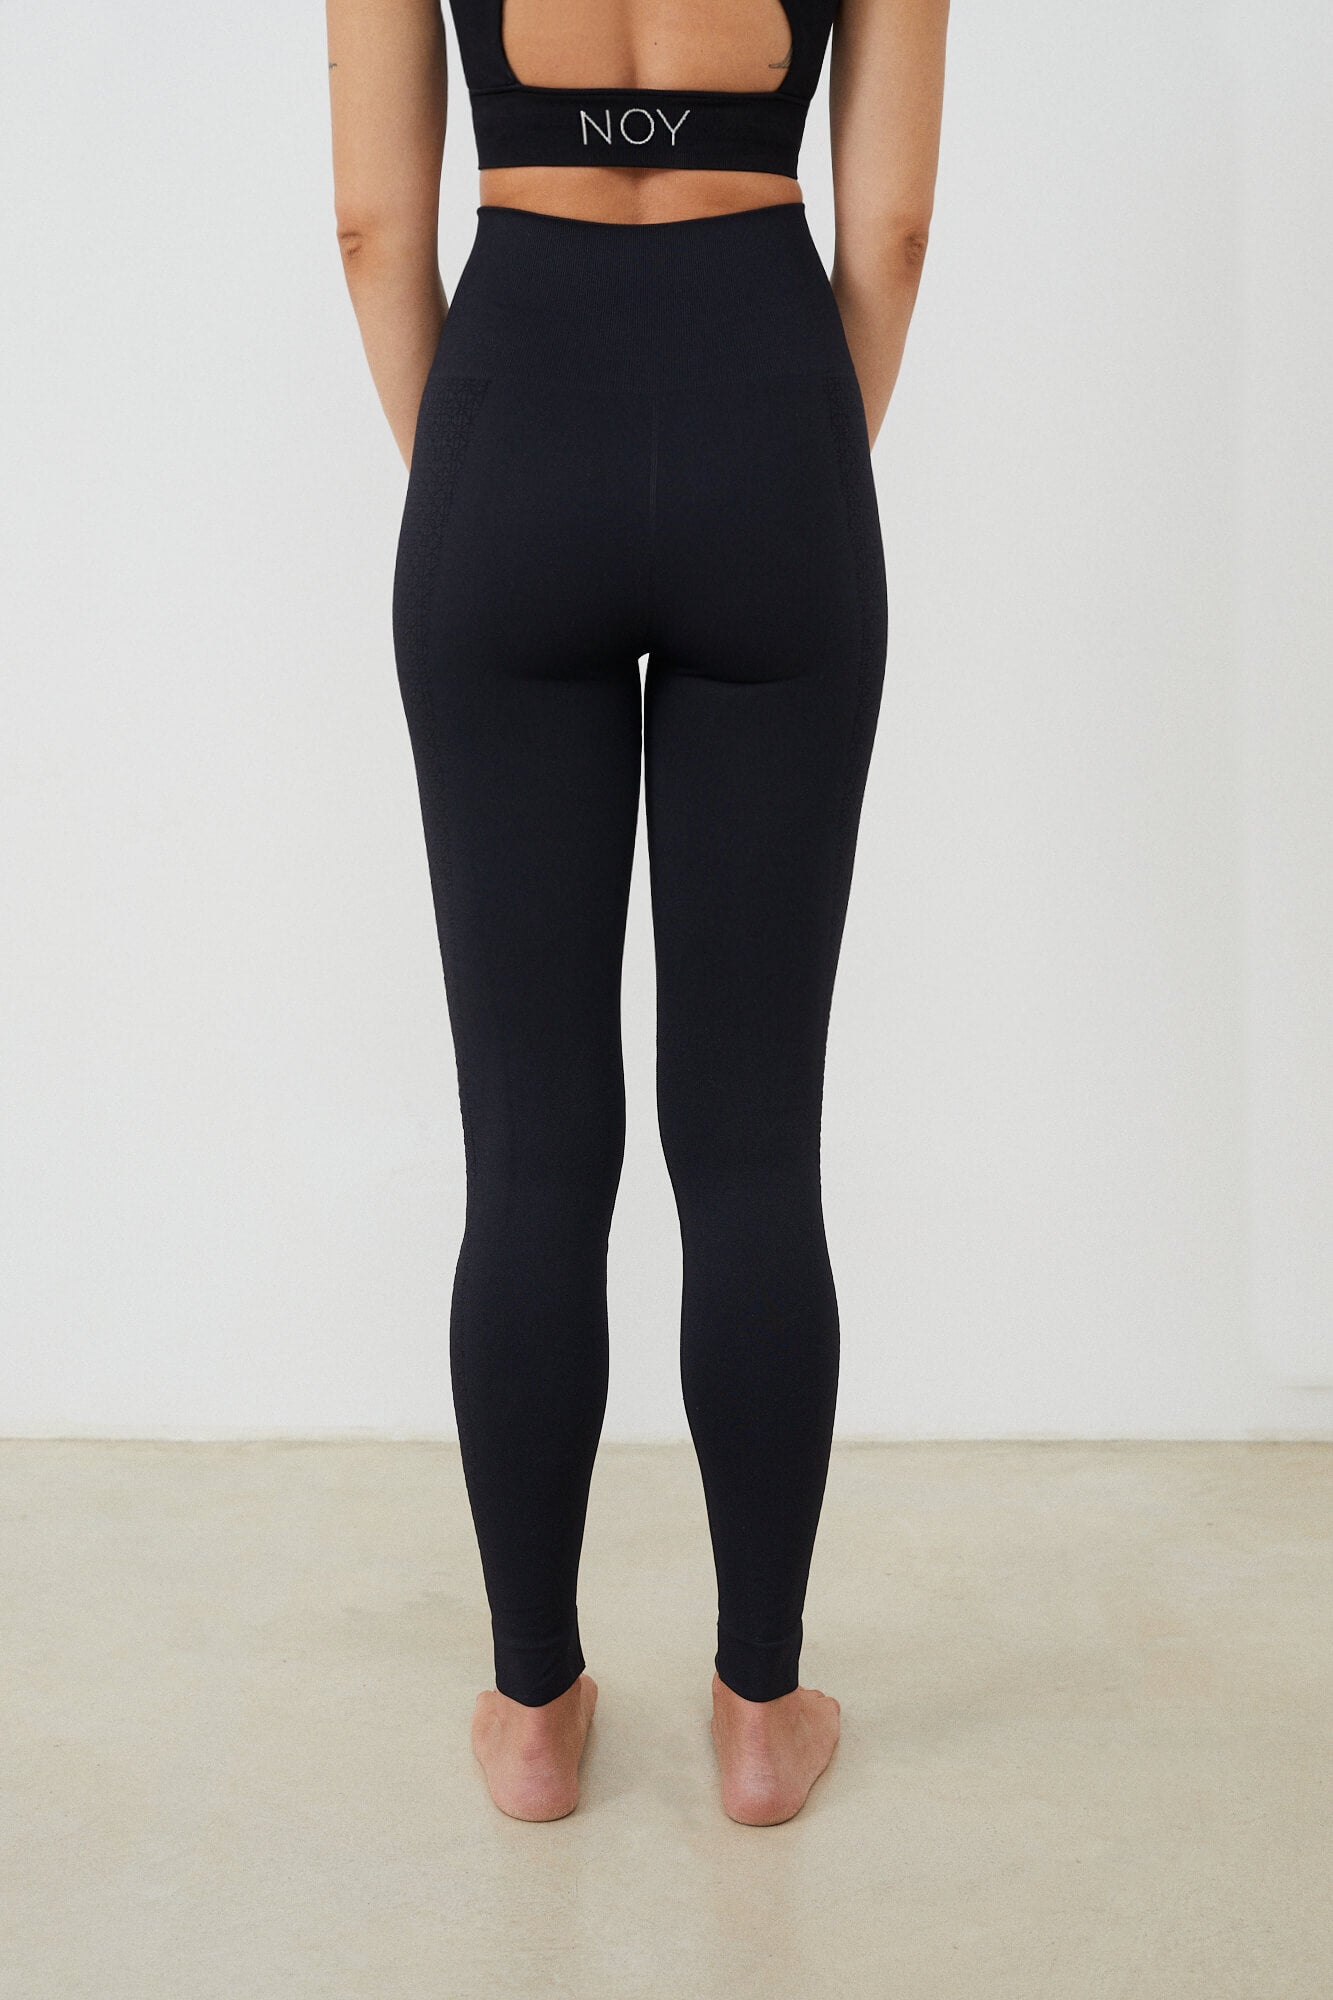 Vista trasera malla yoga larga mujer marca NOY (not only yoga) modelo GAIA sin costuras tono negro black lava